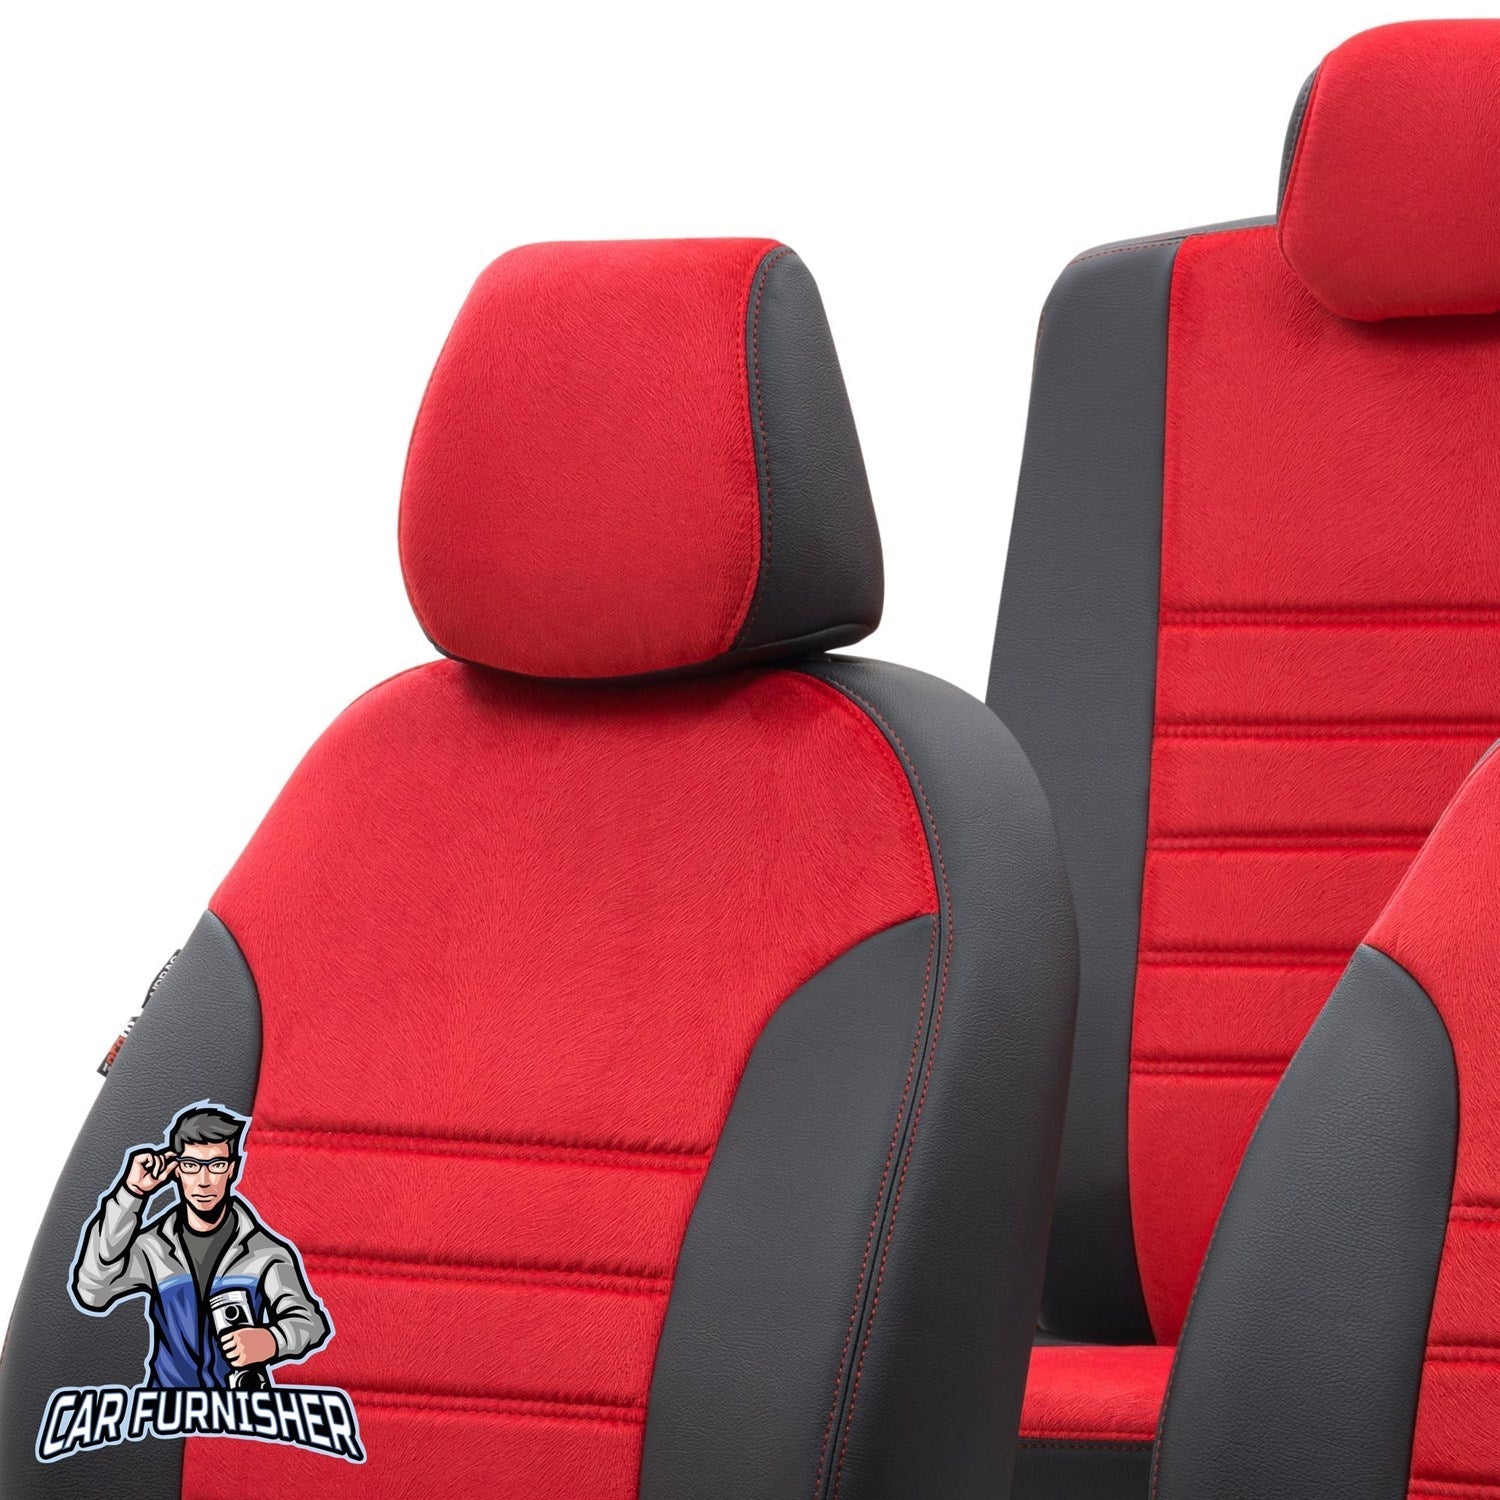 Chery Tiggo Car Seat Covers 2008-2011 London Design Red Full Set (5 Seats + Handrest) Leather & Fabric